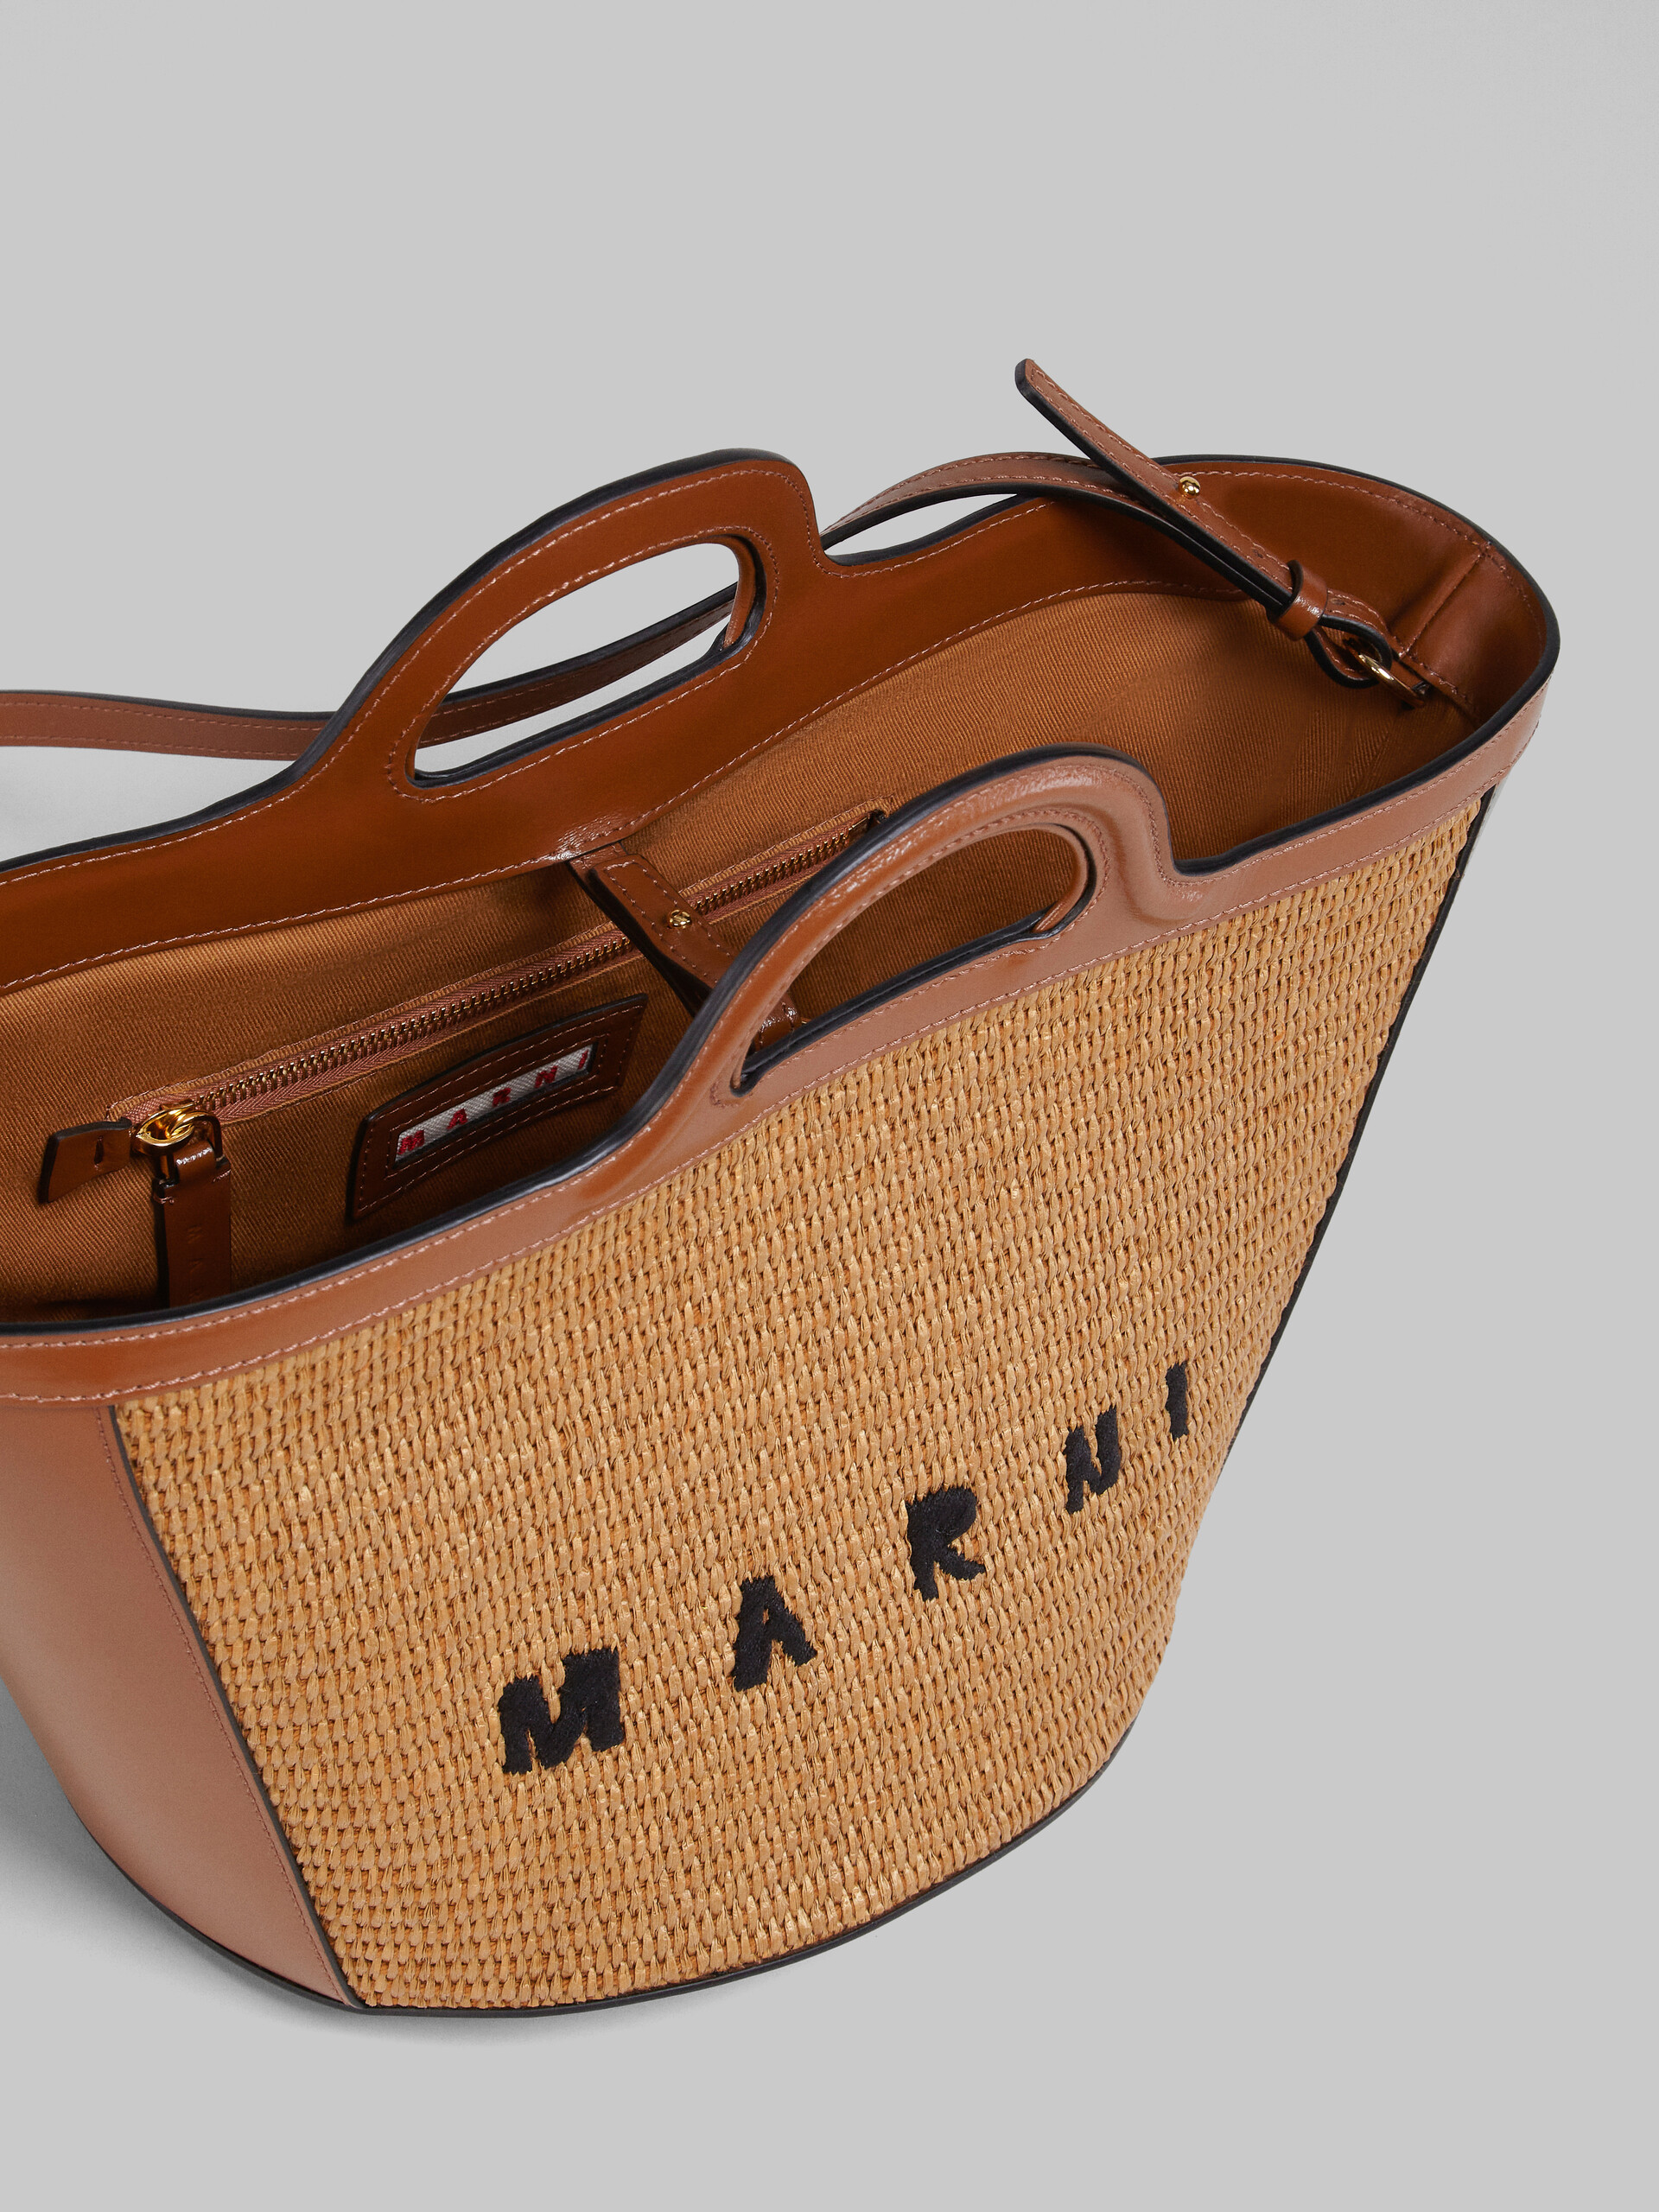 Tropicalia Small Bag in brown leather and raffia | Marni